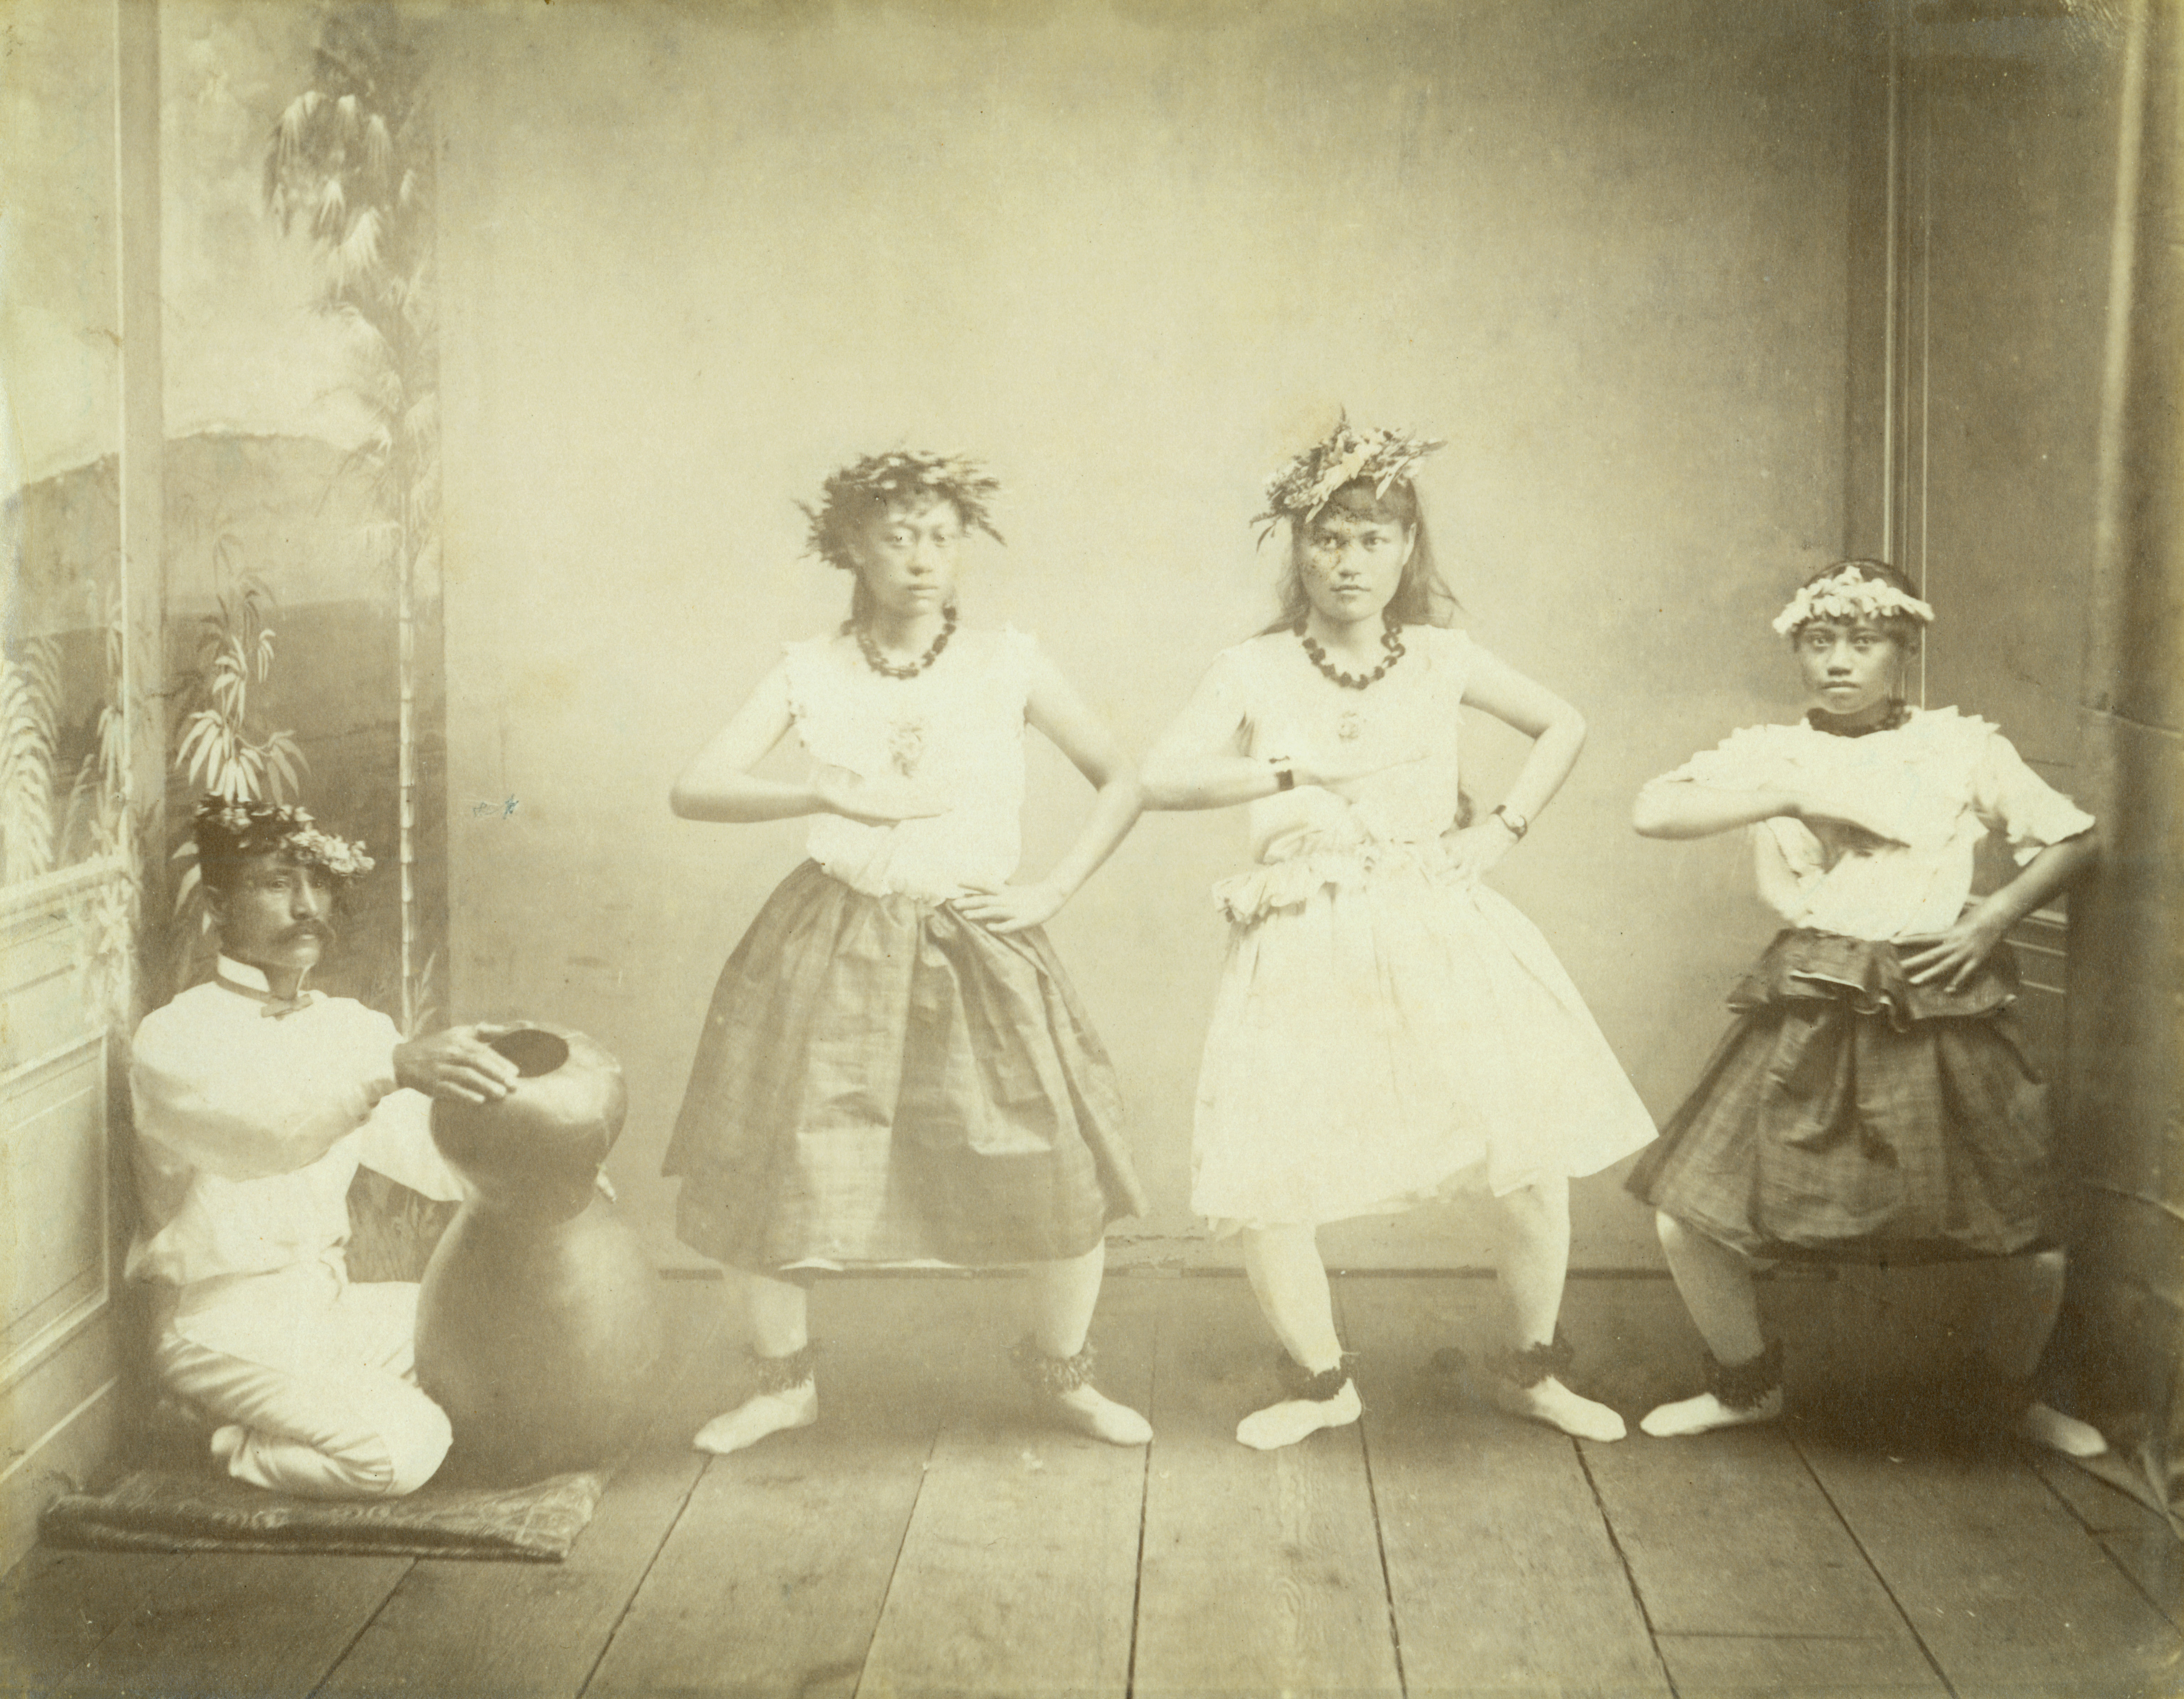 [Hula dancers and chanter] Hawaiʻi, ca. 1880. Photo by H. L. Chase.